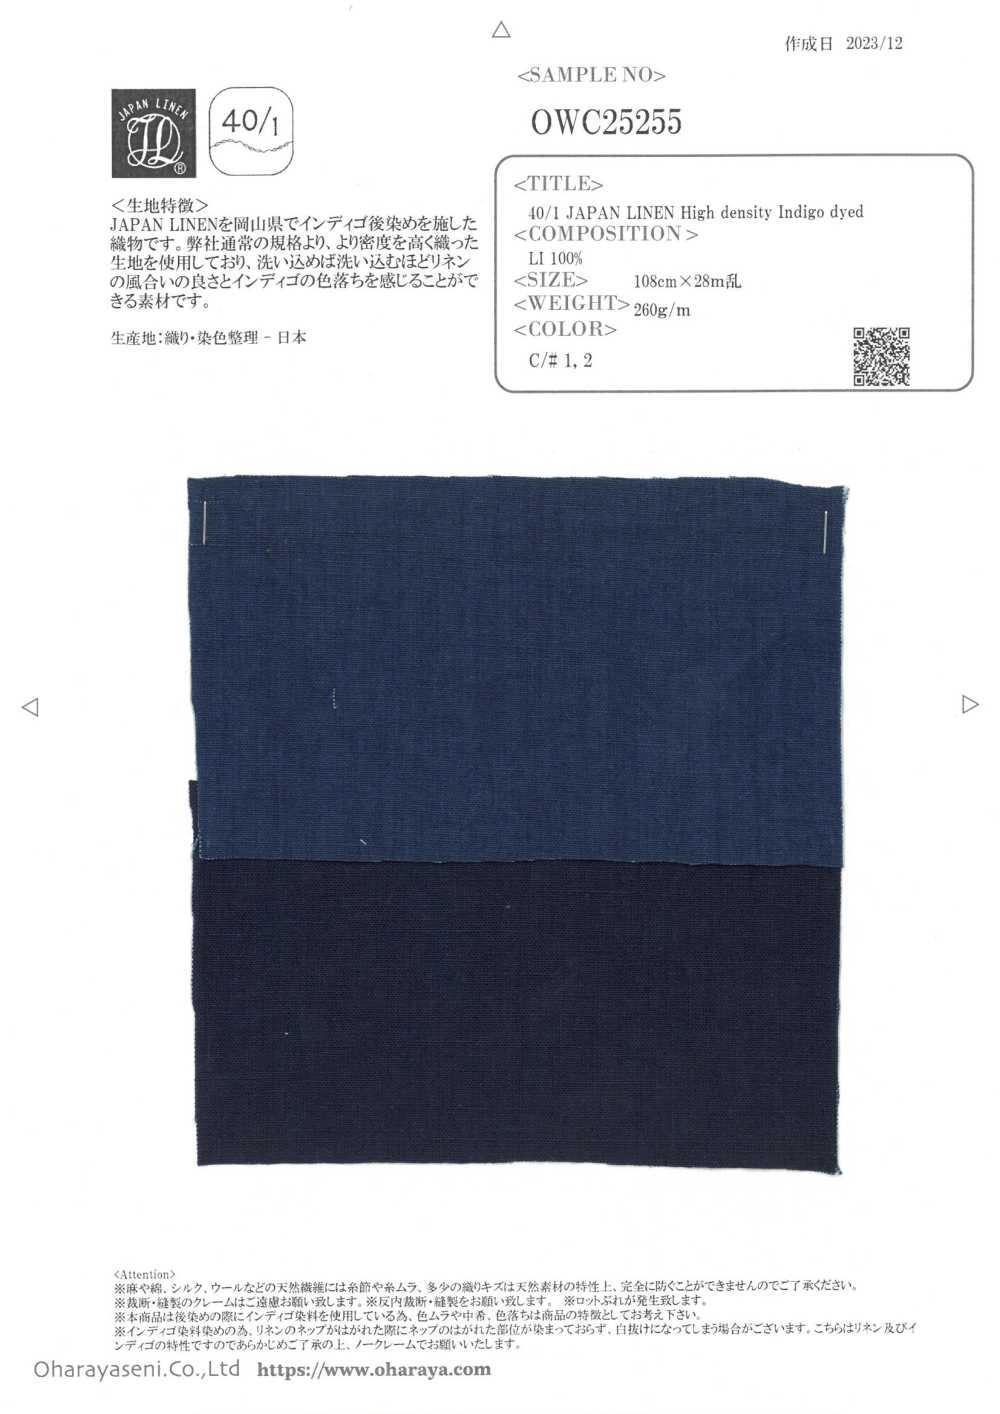 OWC25255 40/1 JAPAN LINEN High density Indigo dyed[원단] Oharayaseni